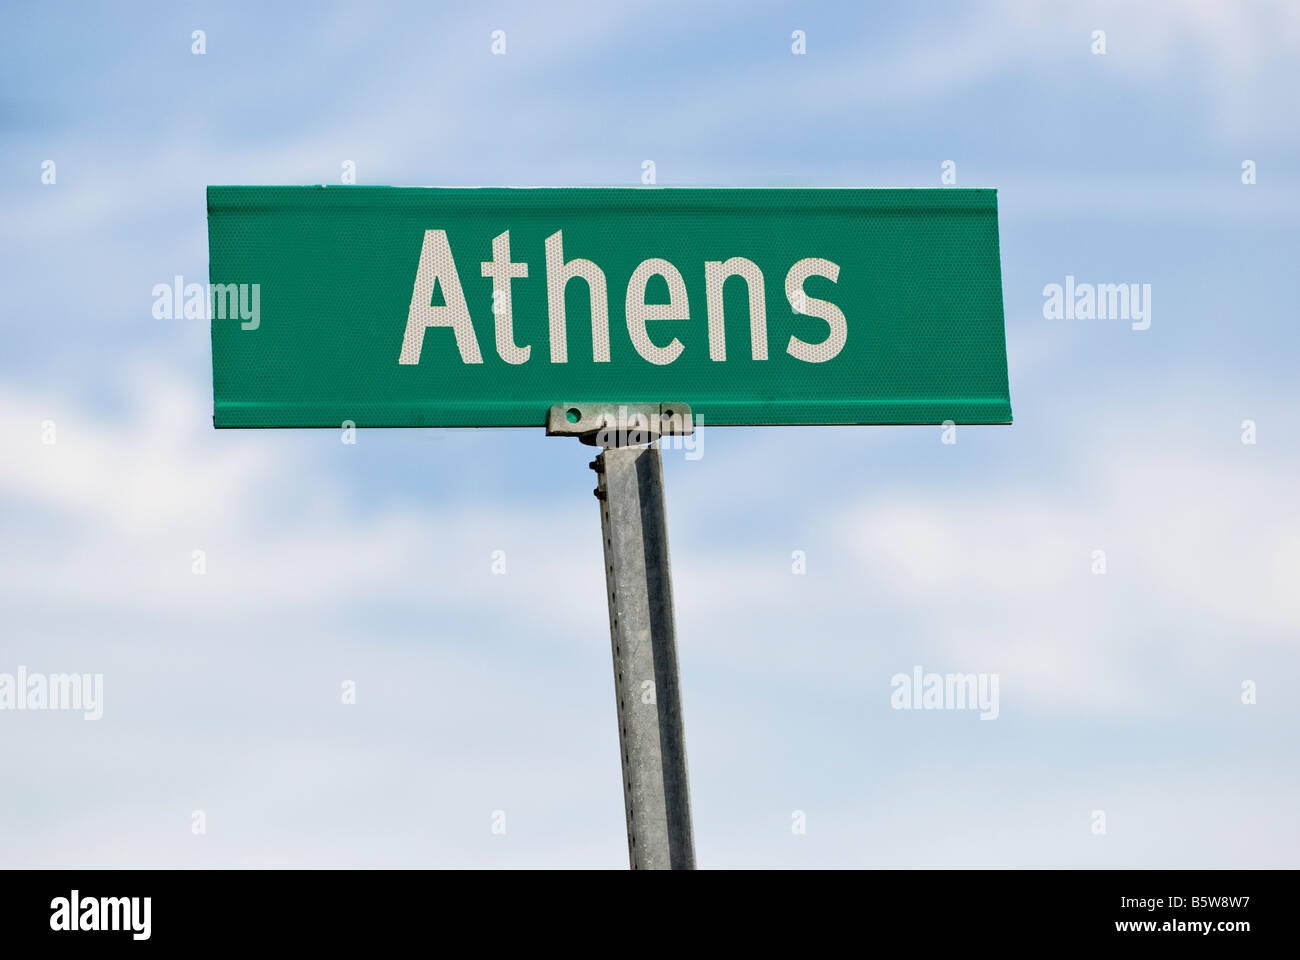 Athens street sign Stock Photo